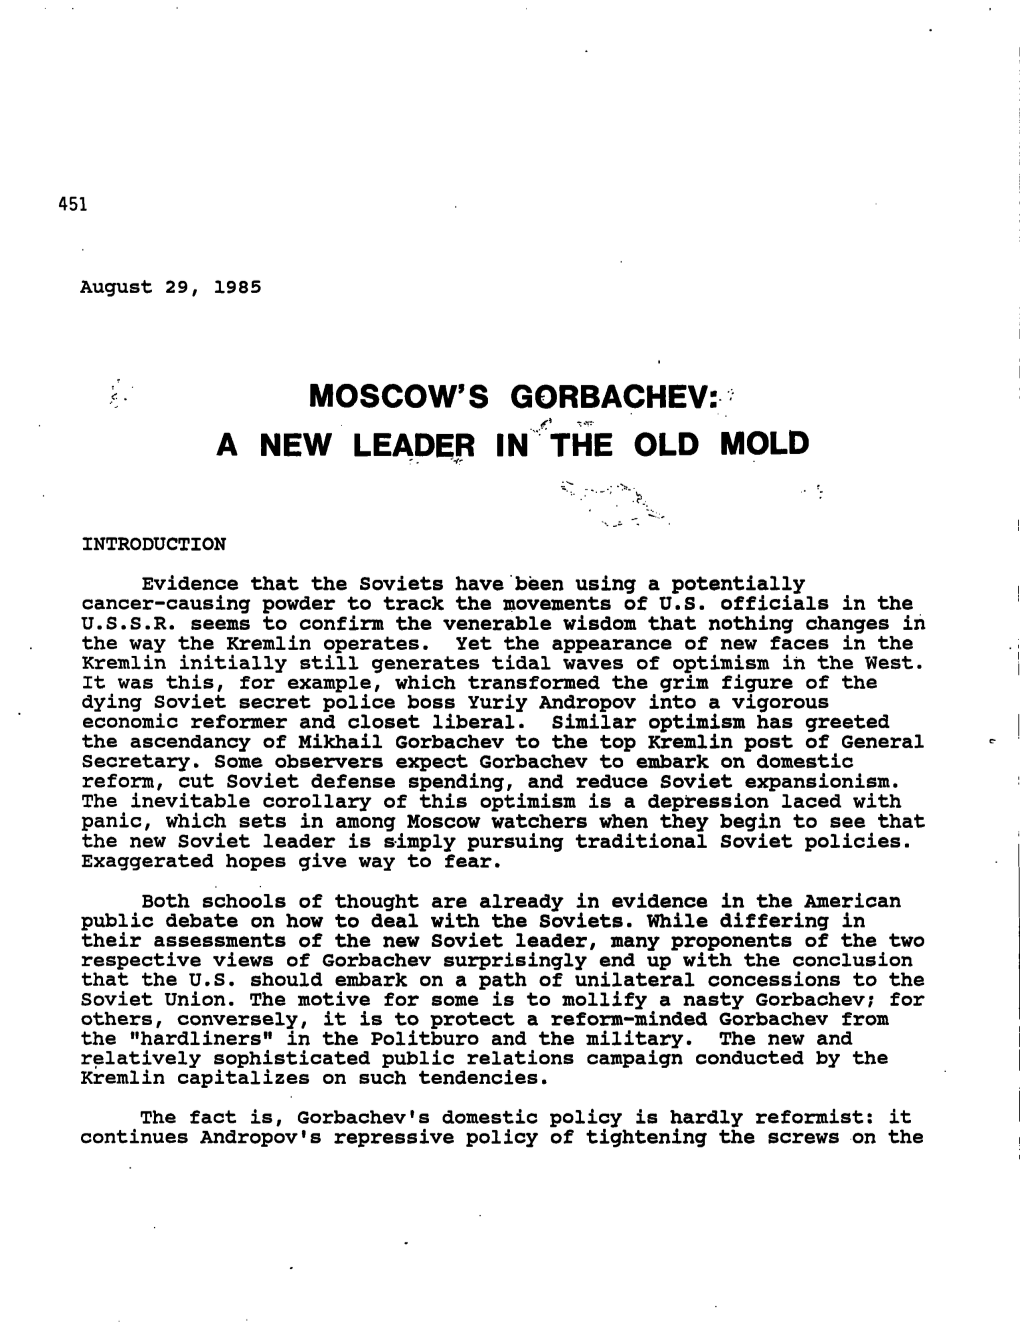 Moscow's Gorbachev